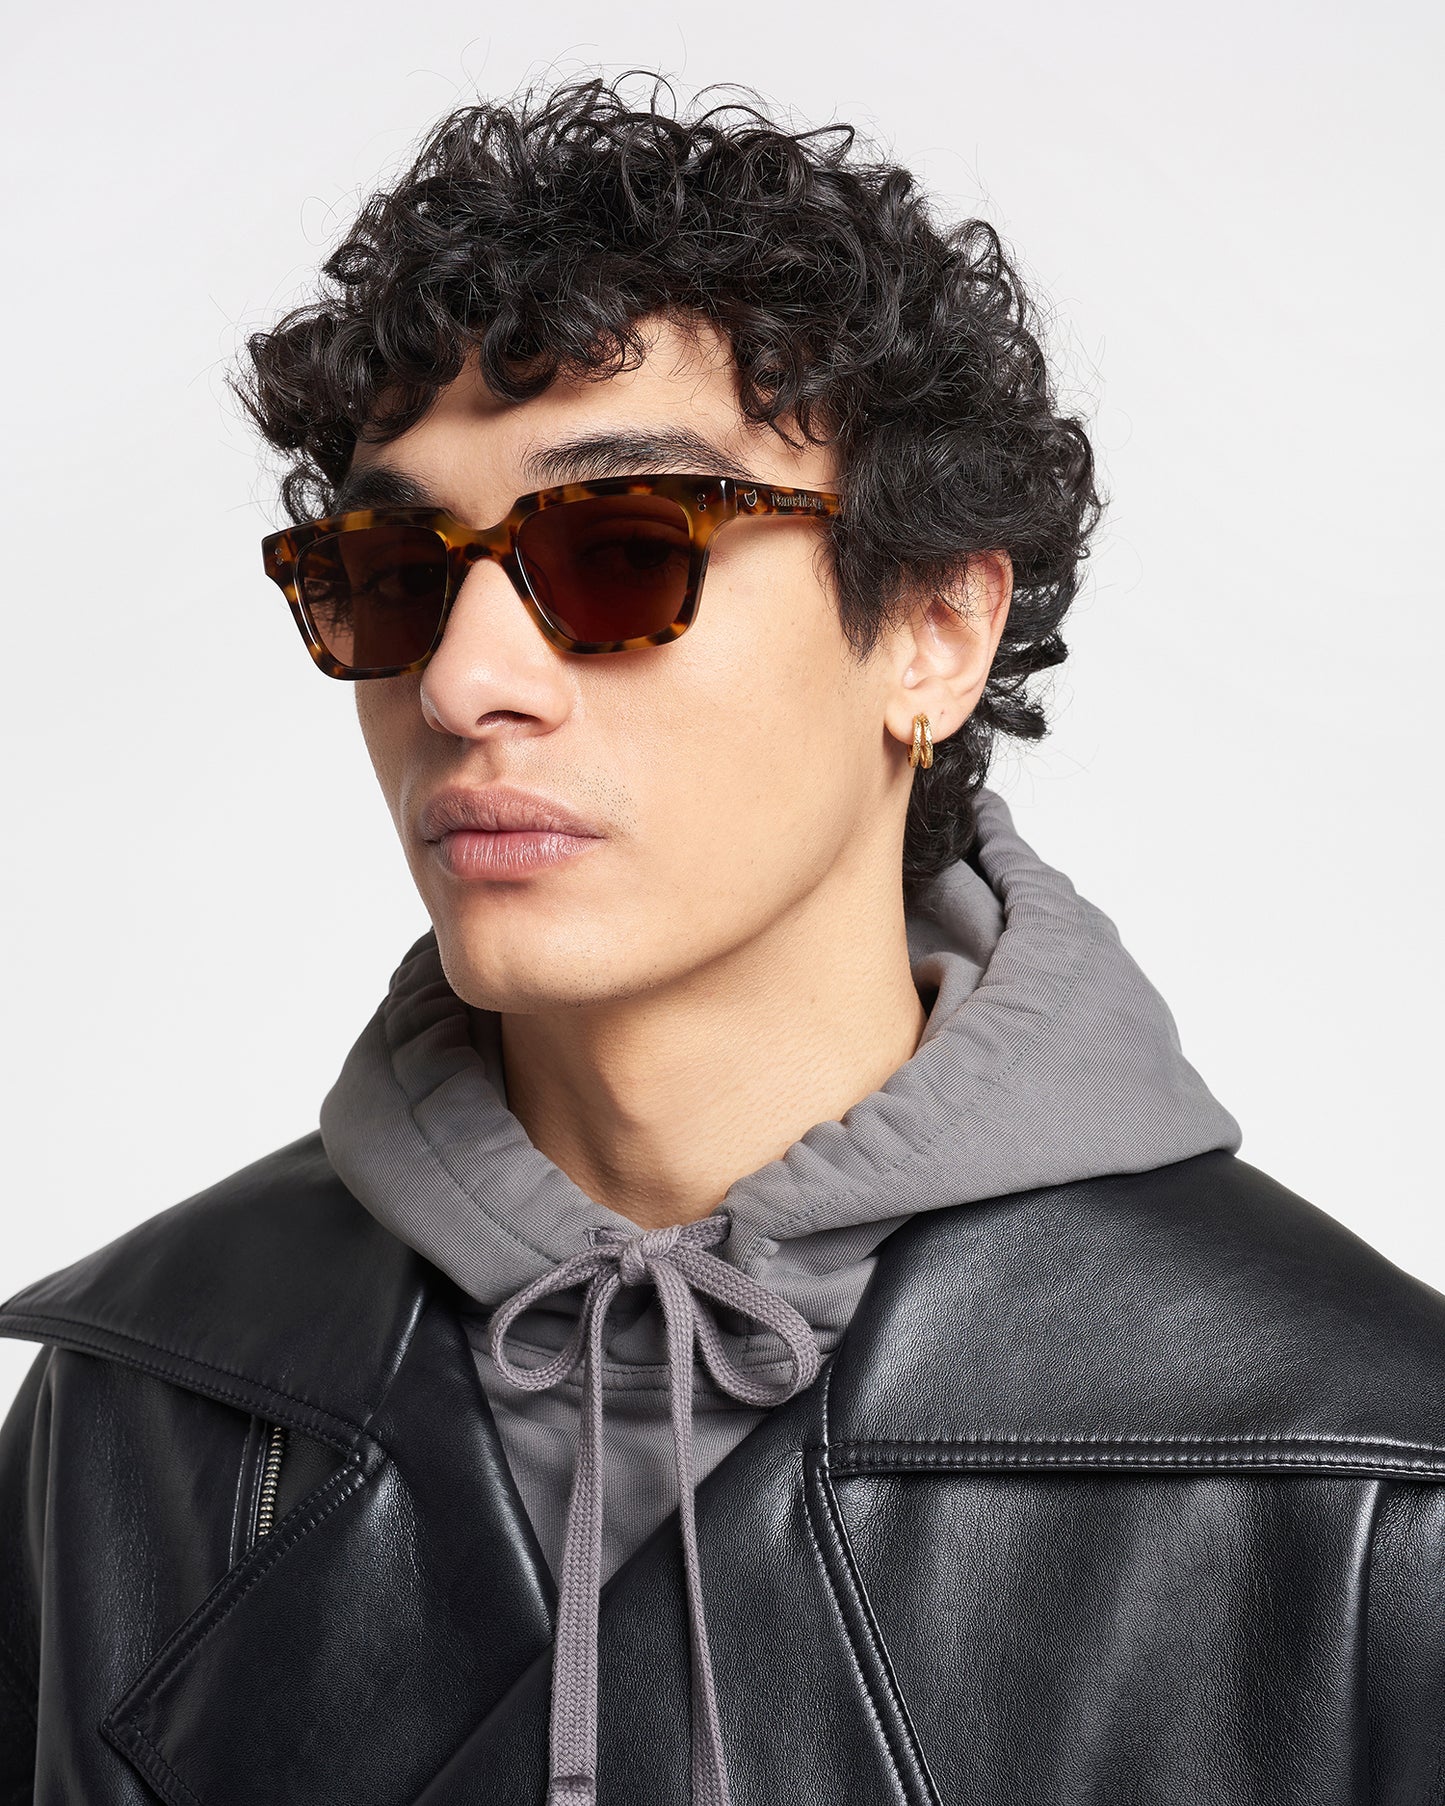 Cadao - Bio-Plastic Angular Sunglasses - Dark Amber